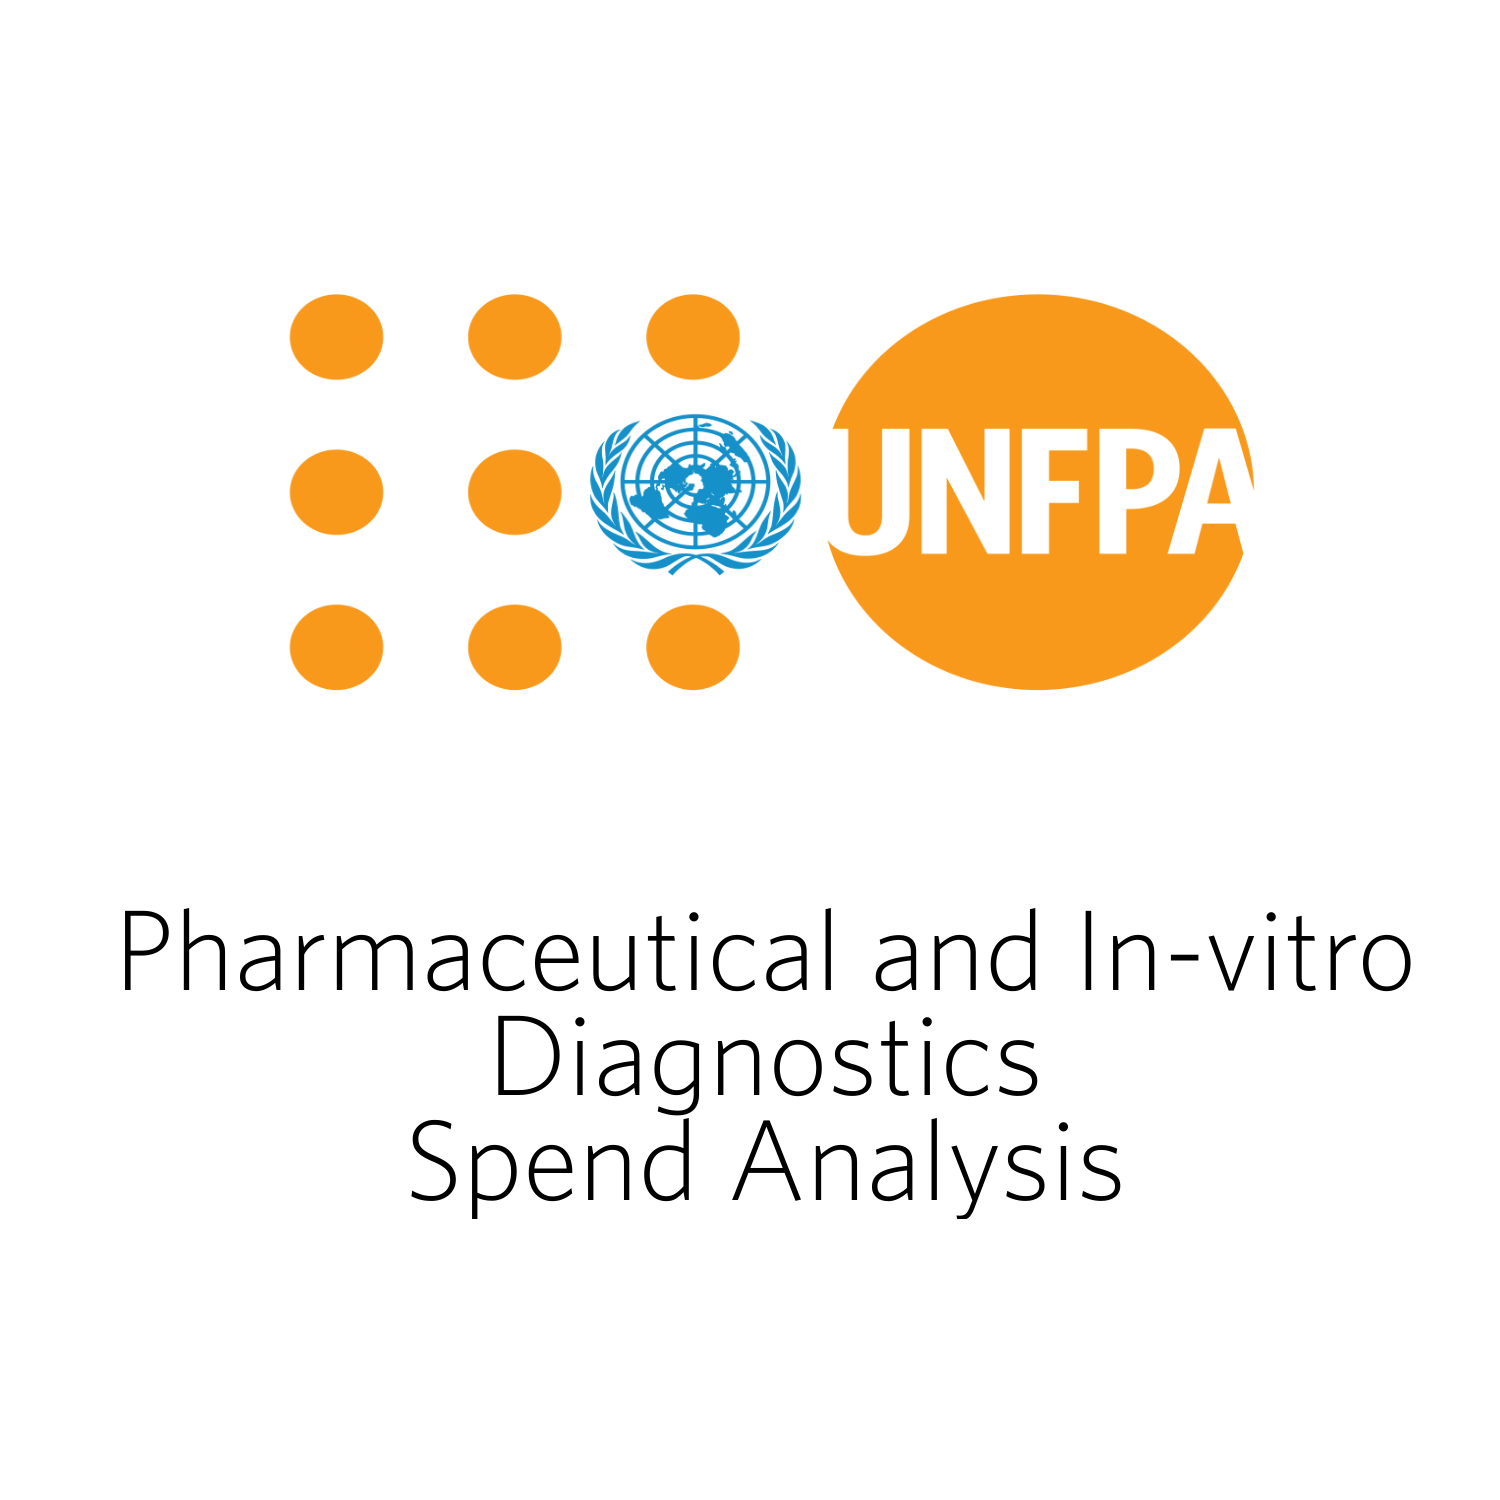 Pharmaceuticals Spend Analysis 2021 - 2018